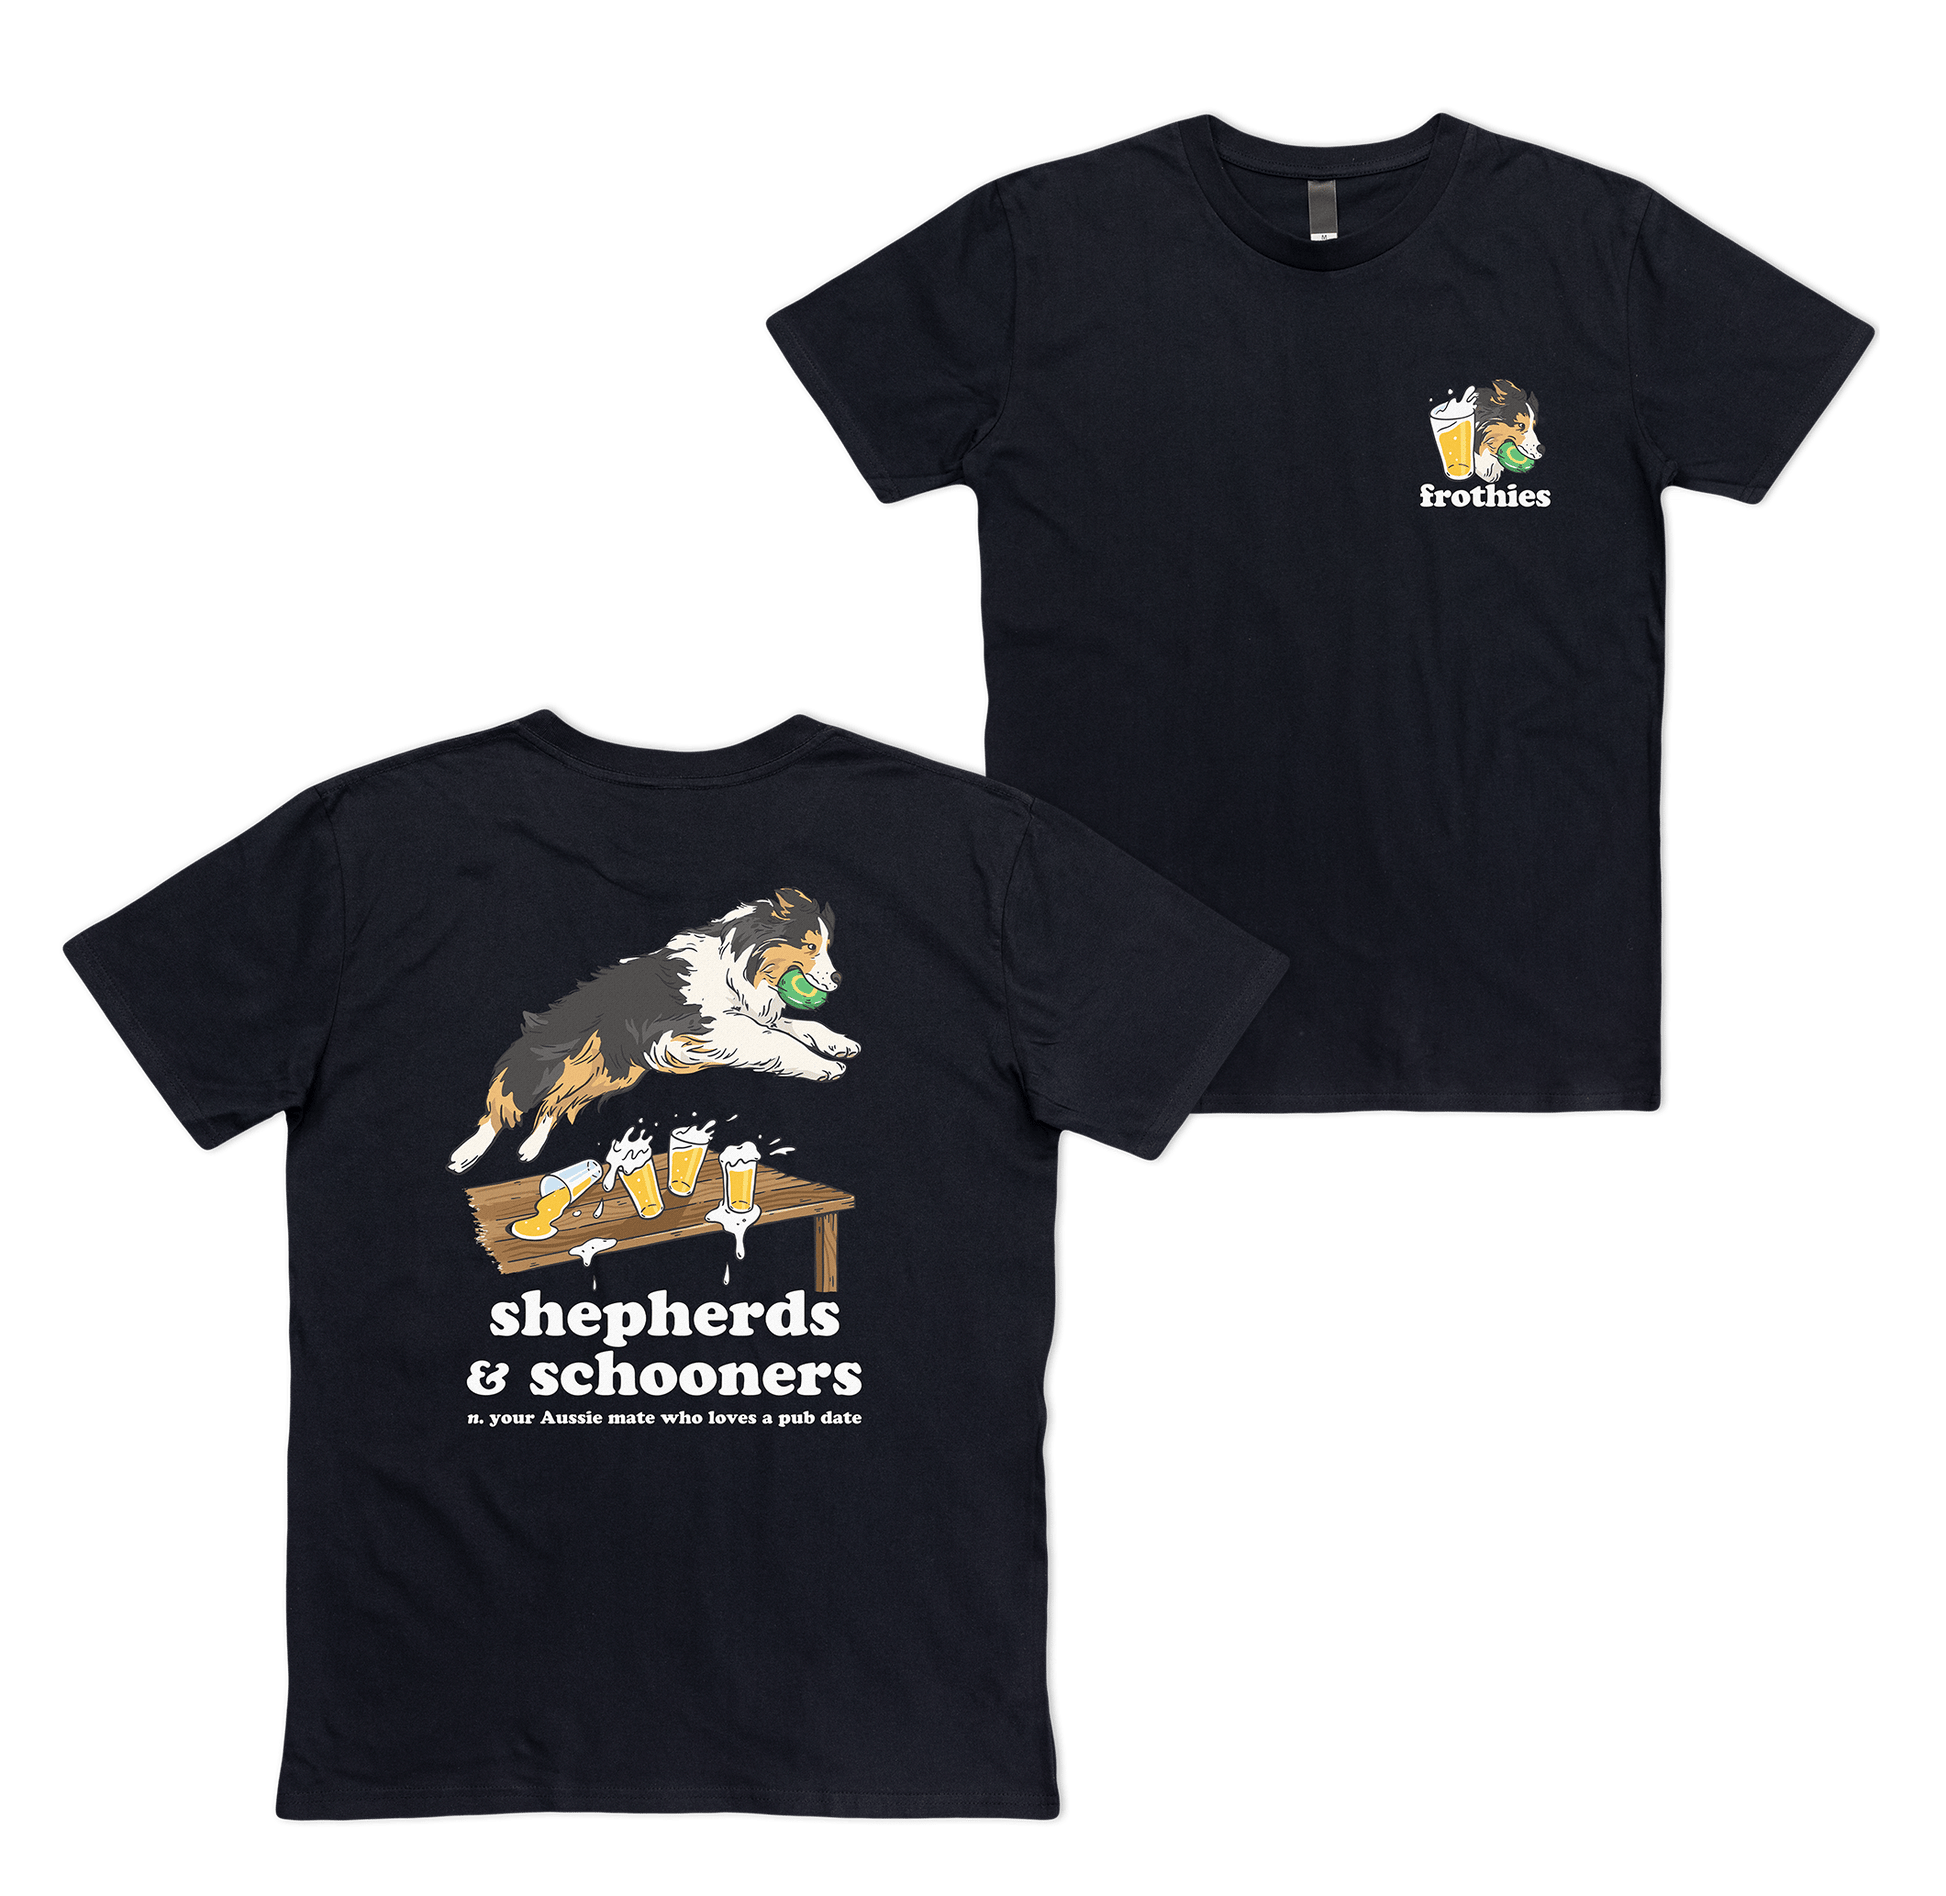 Shepherds & Schooners Tee Black T-Shirt Frothies